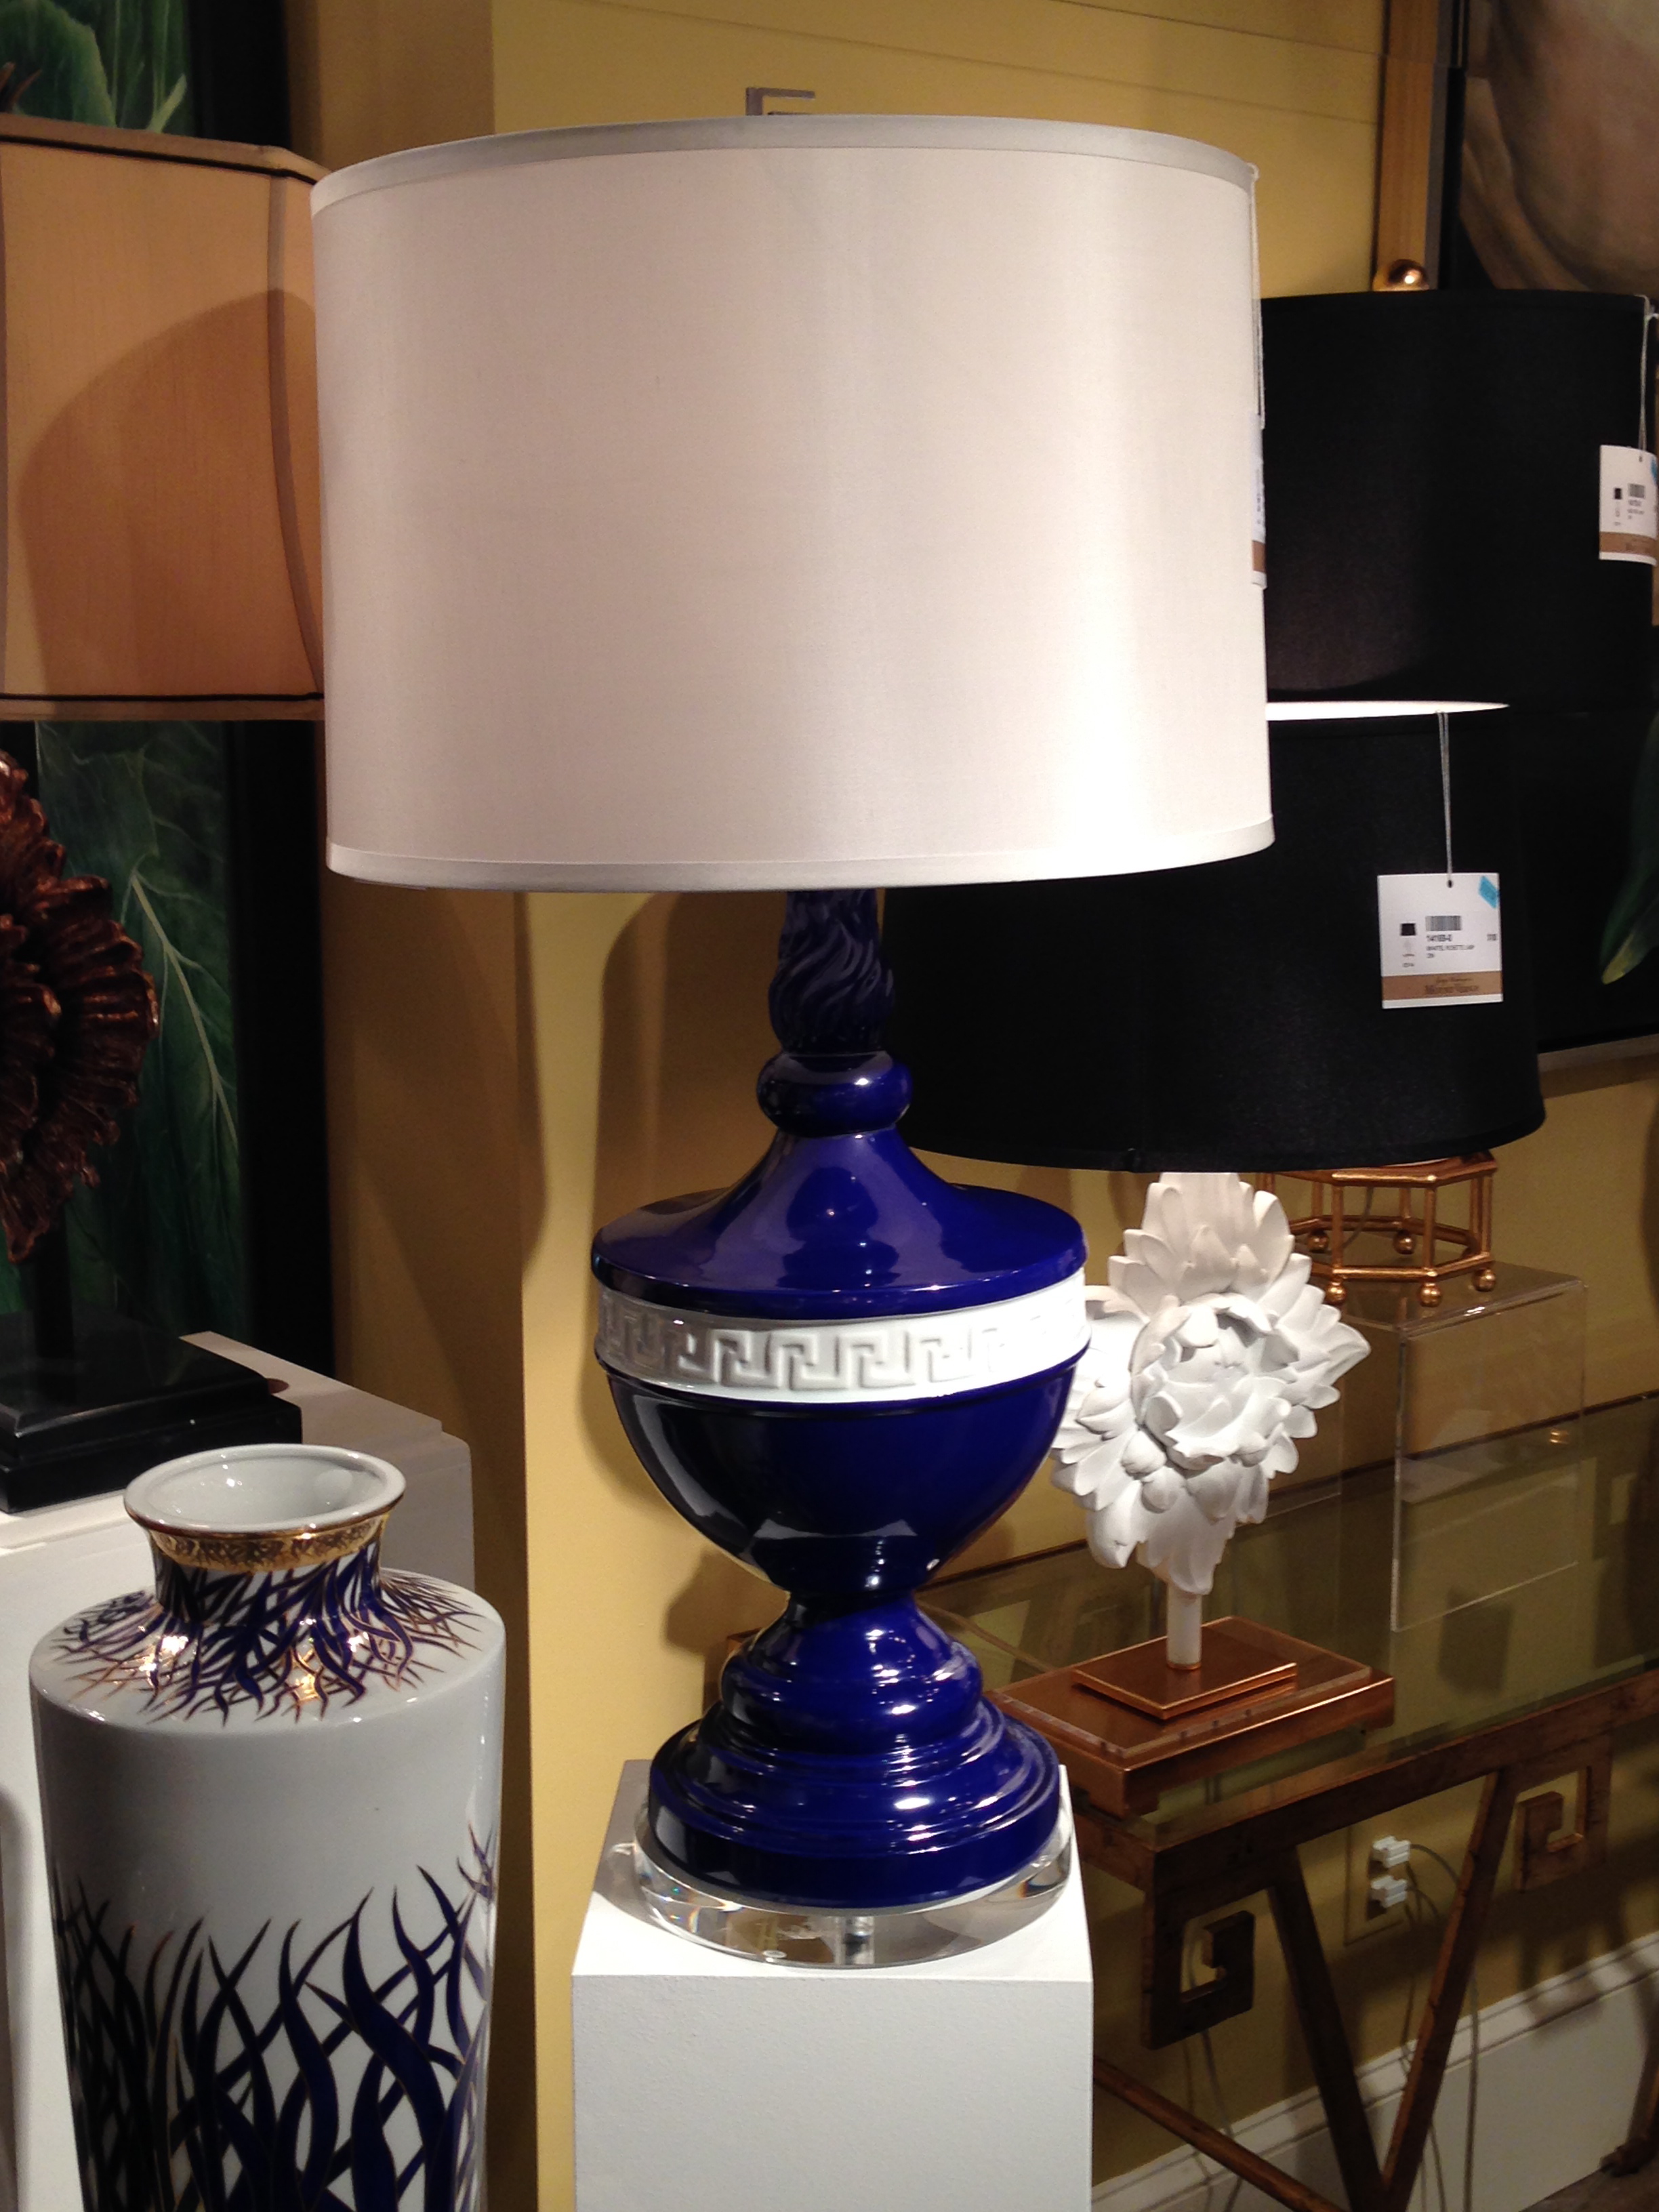 Wildwood Lamps Blue Urn Lamp | #hpmkt Spring 2014 | via Interiors For Families